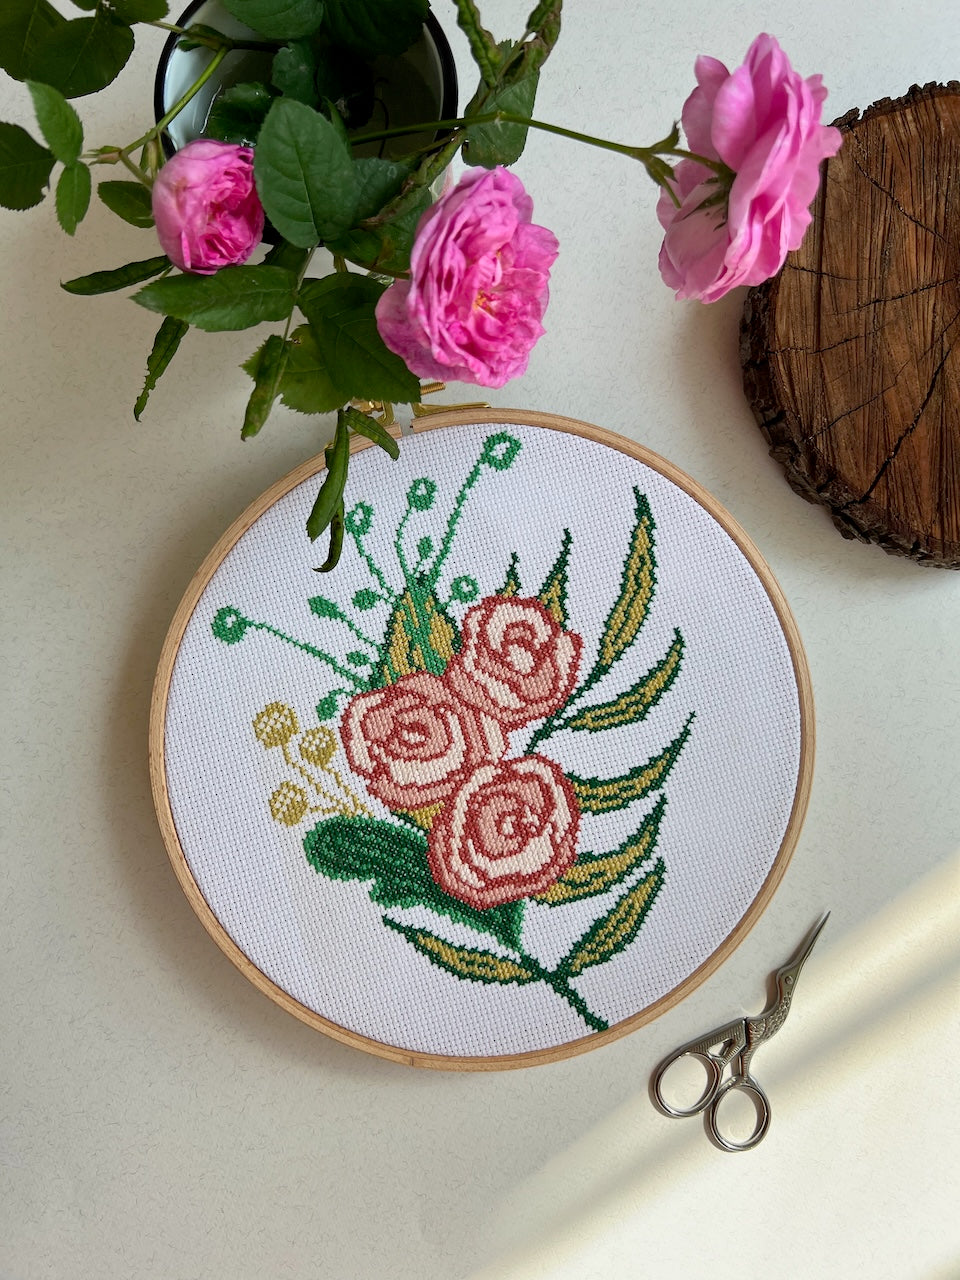 Garden roses 1 - cross stitch pattern